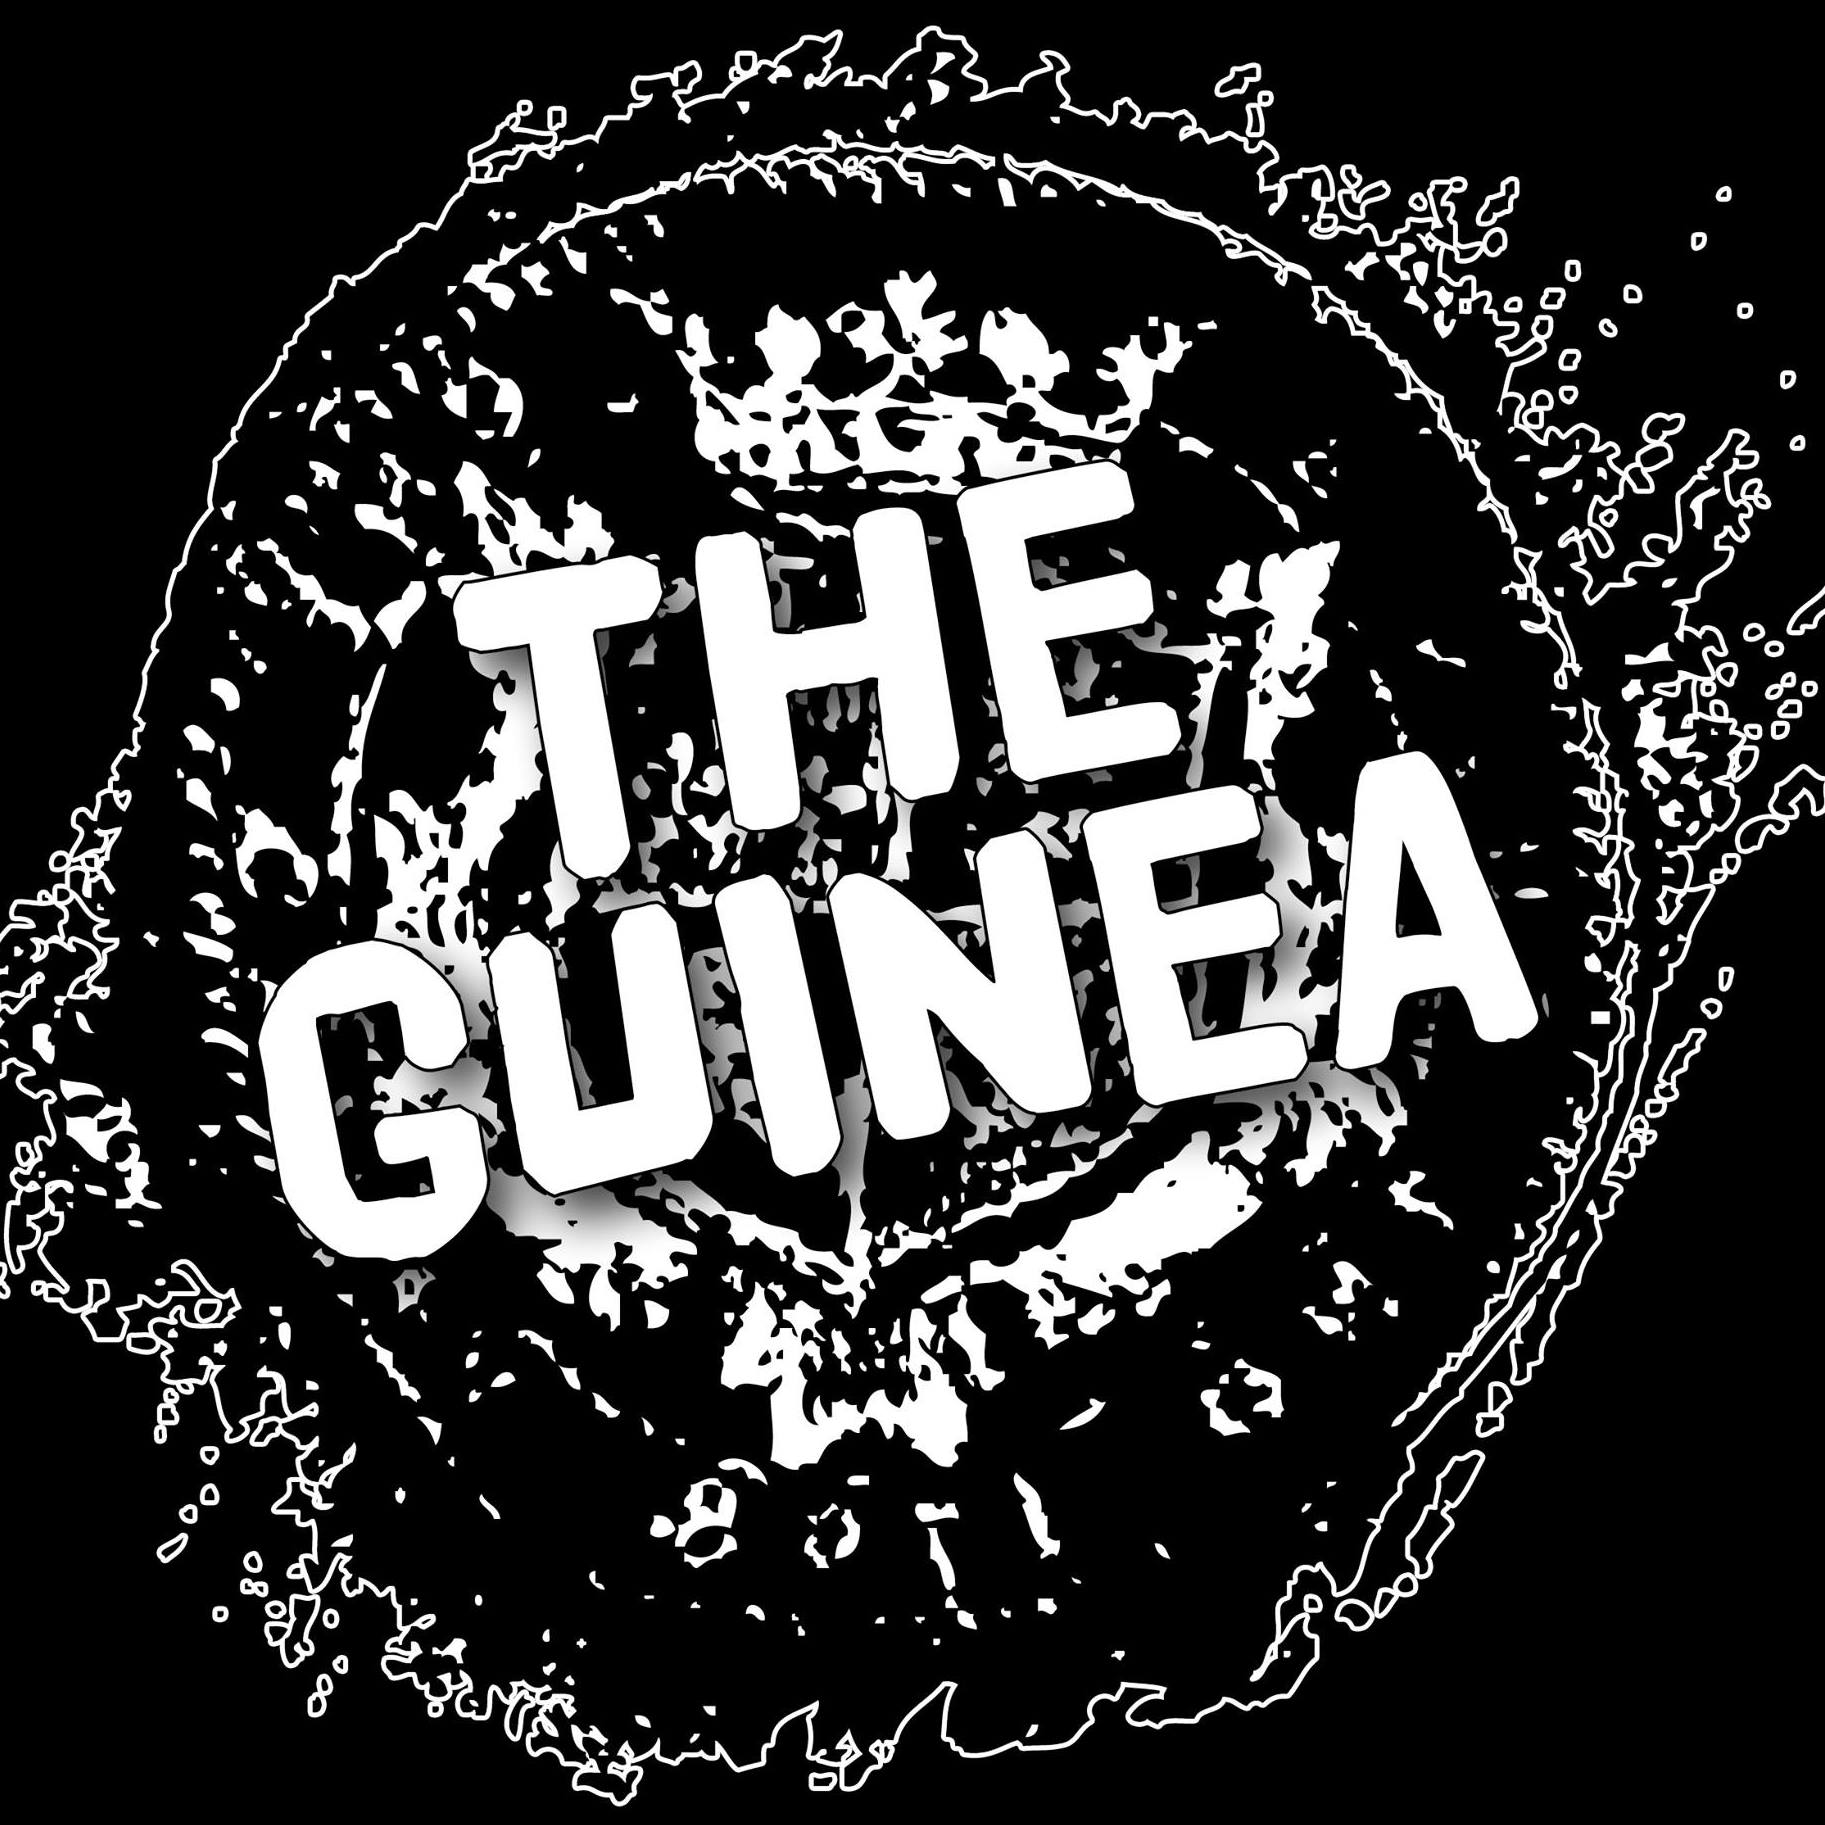 The Guinea logo